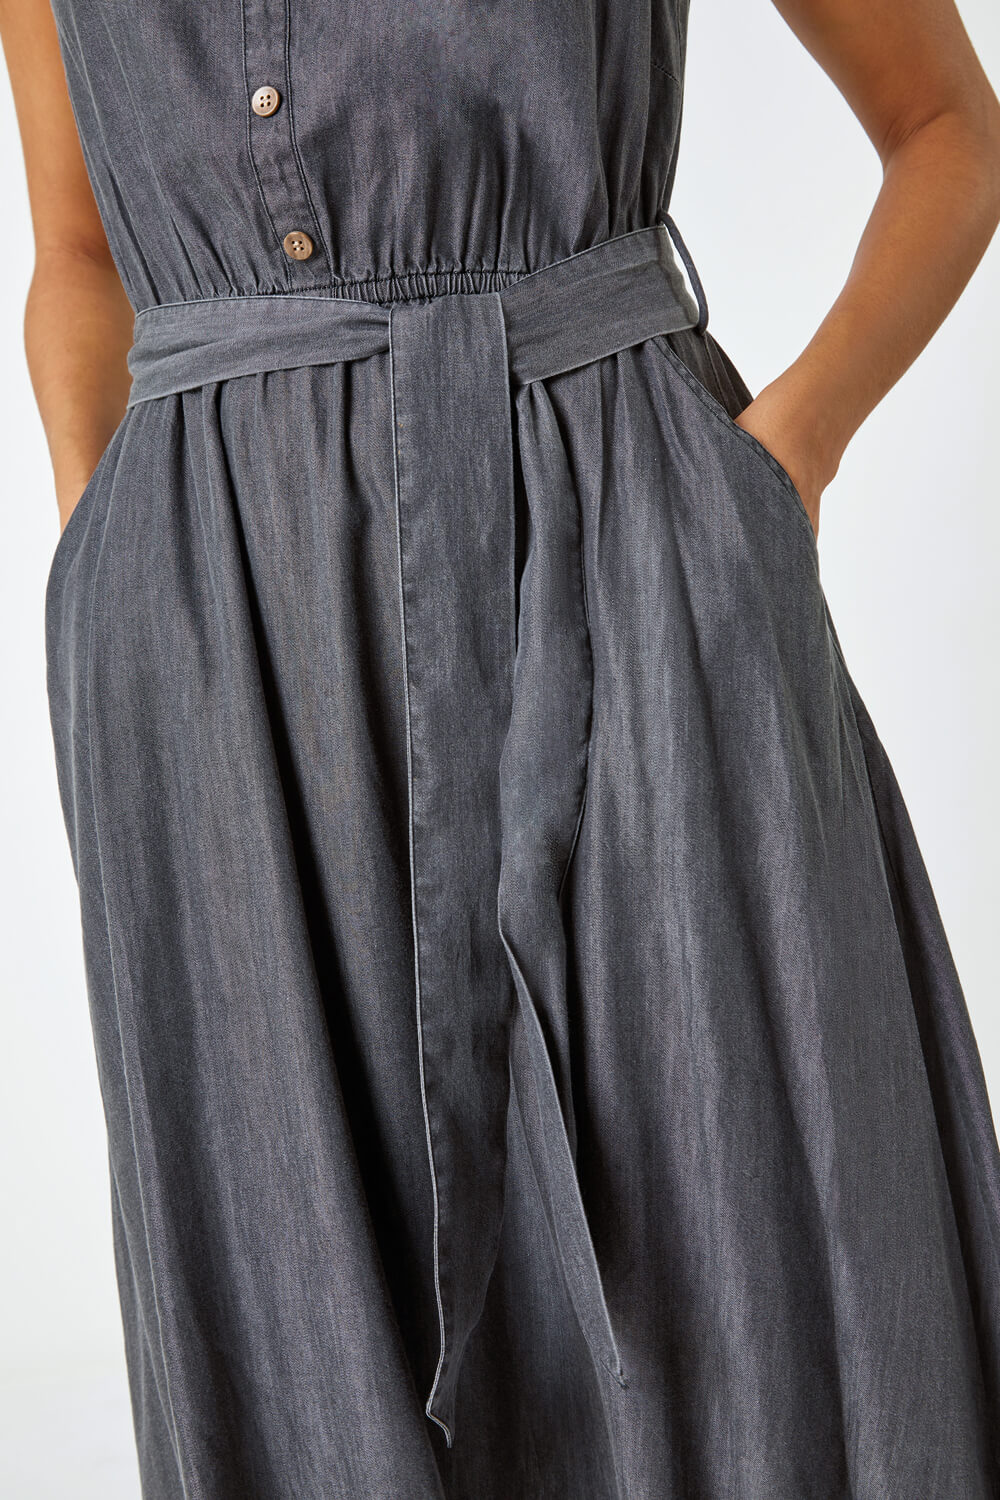 Dark Grey Sleeveless Belted Cotton Dress, Image 5 of 5